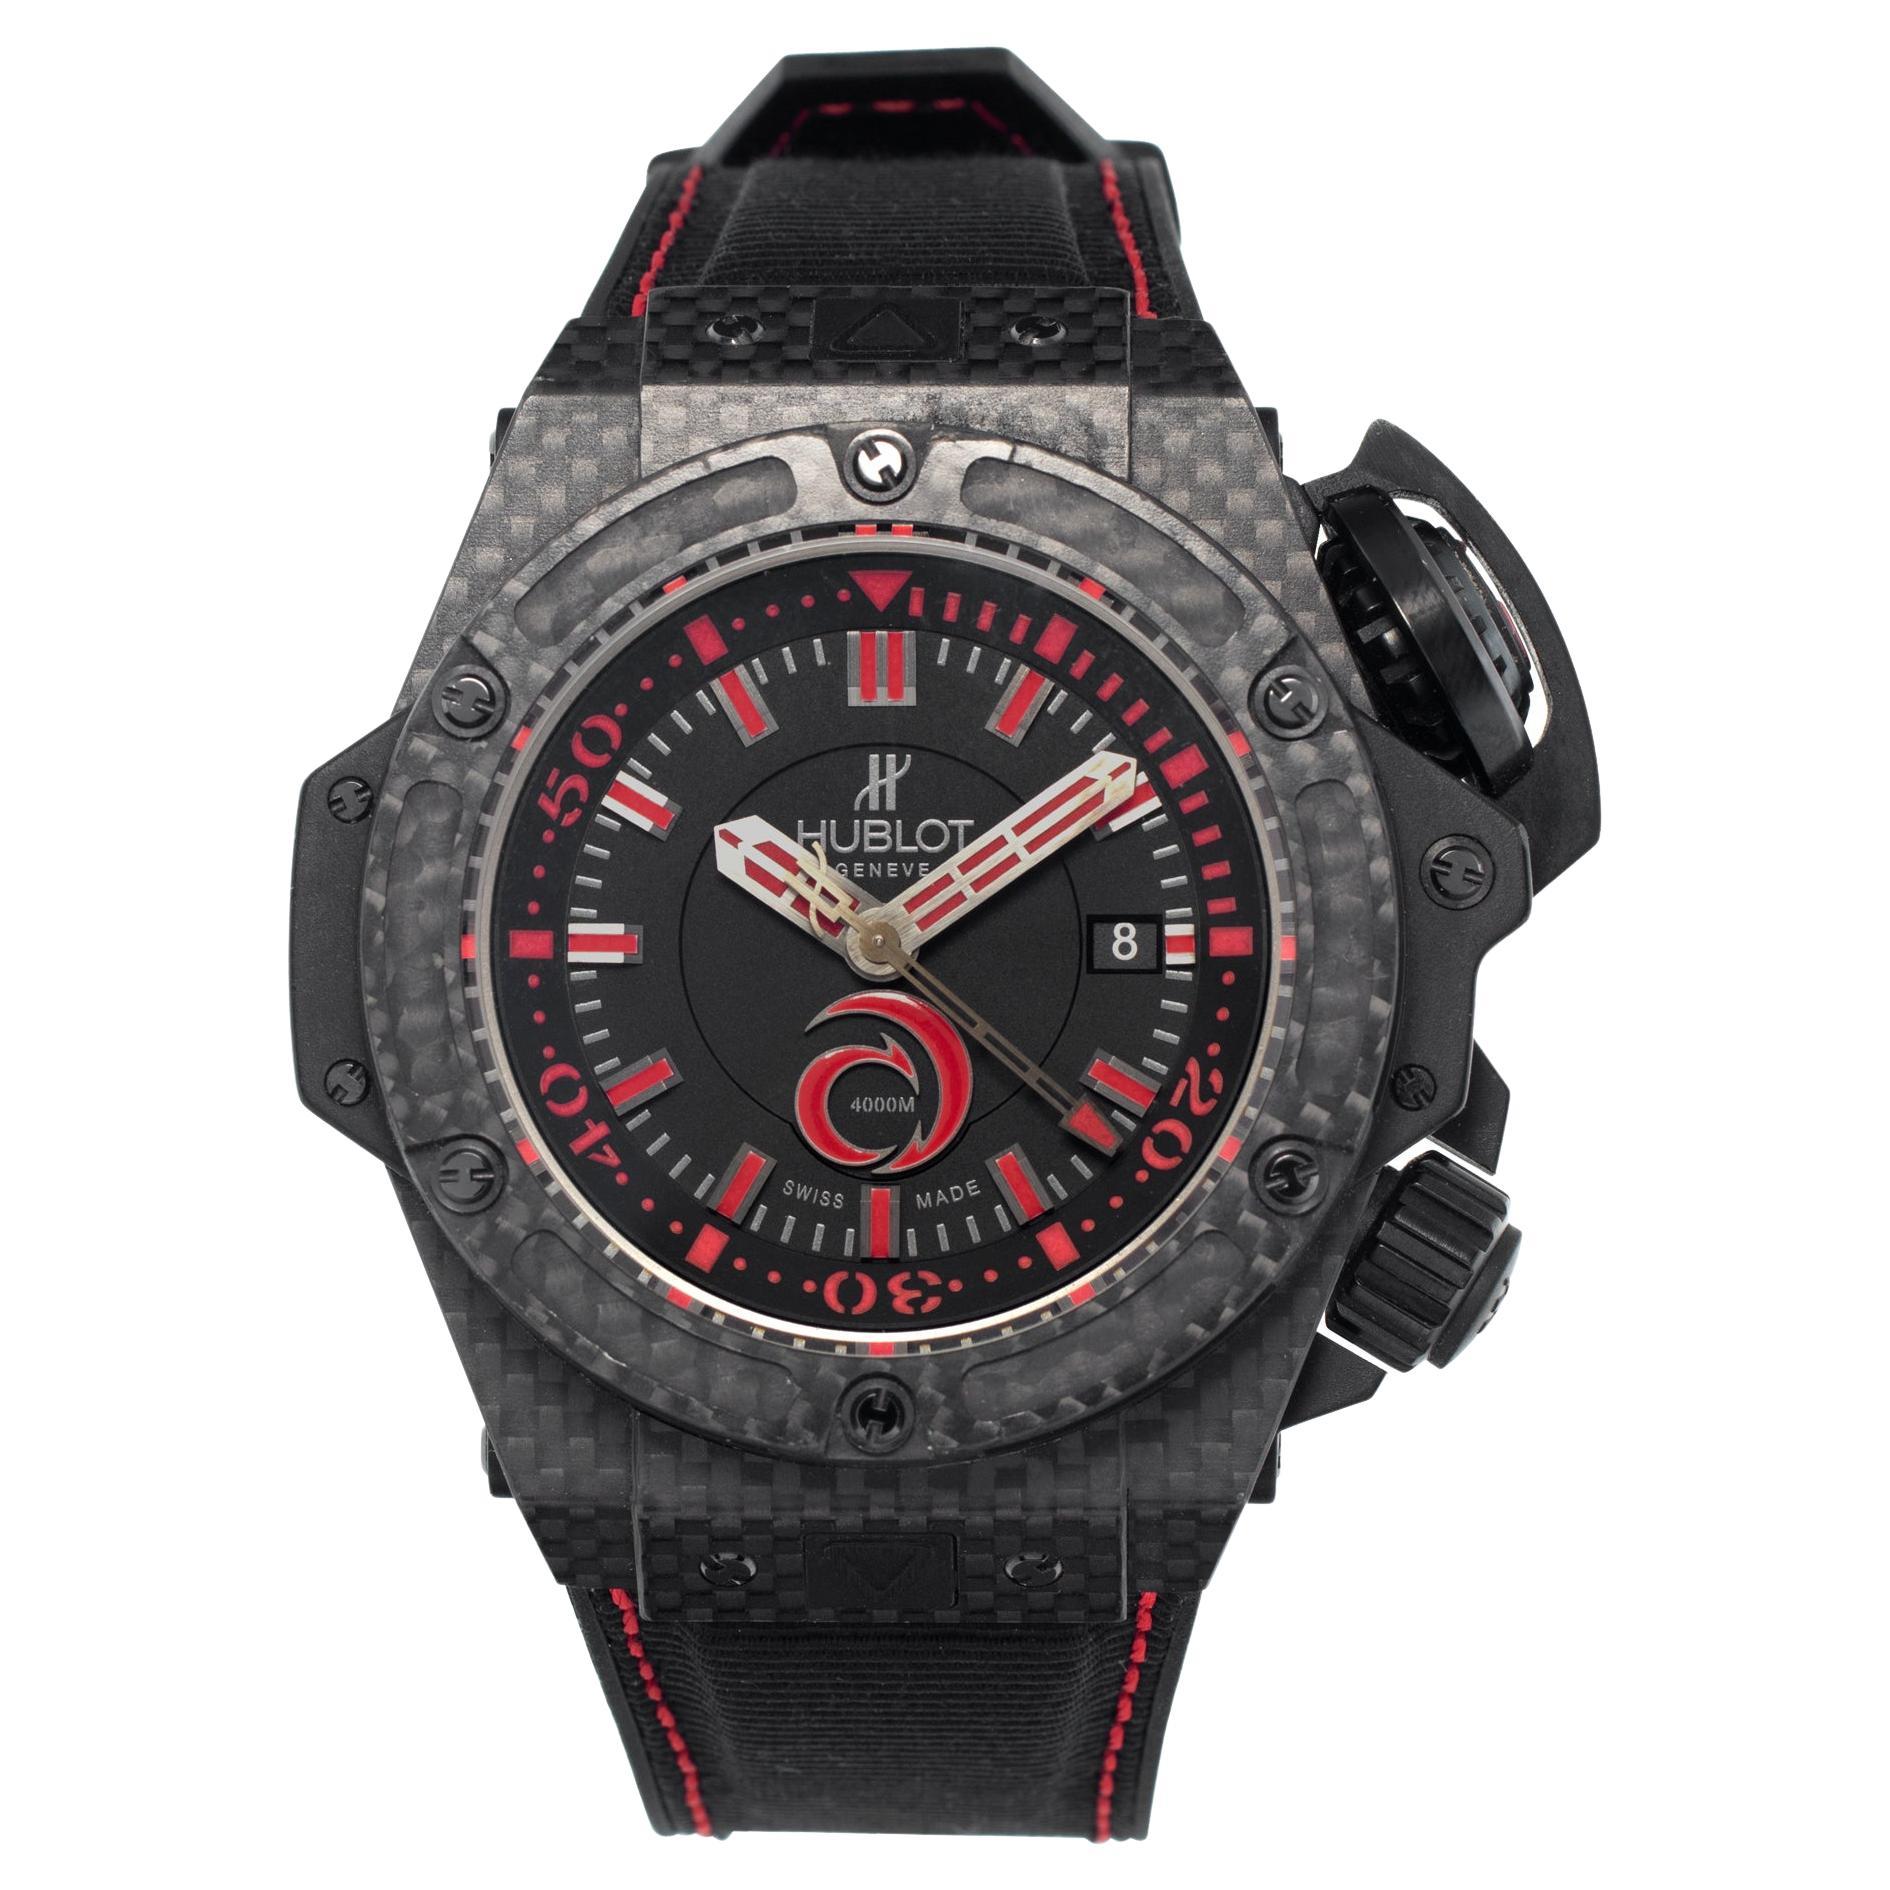 Hublot King Power "Alinghi" Wristwatch Ref 731.Qx.1140.Nr.Agi12 For Sale